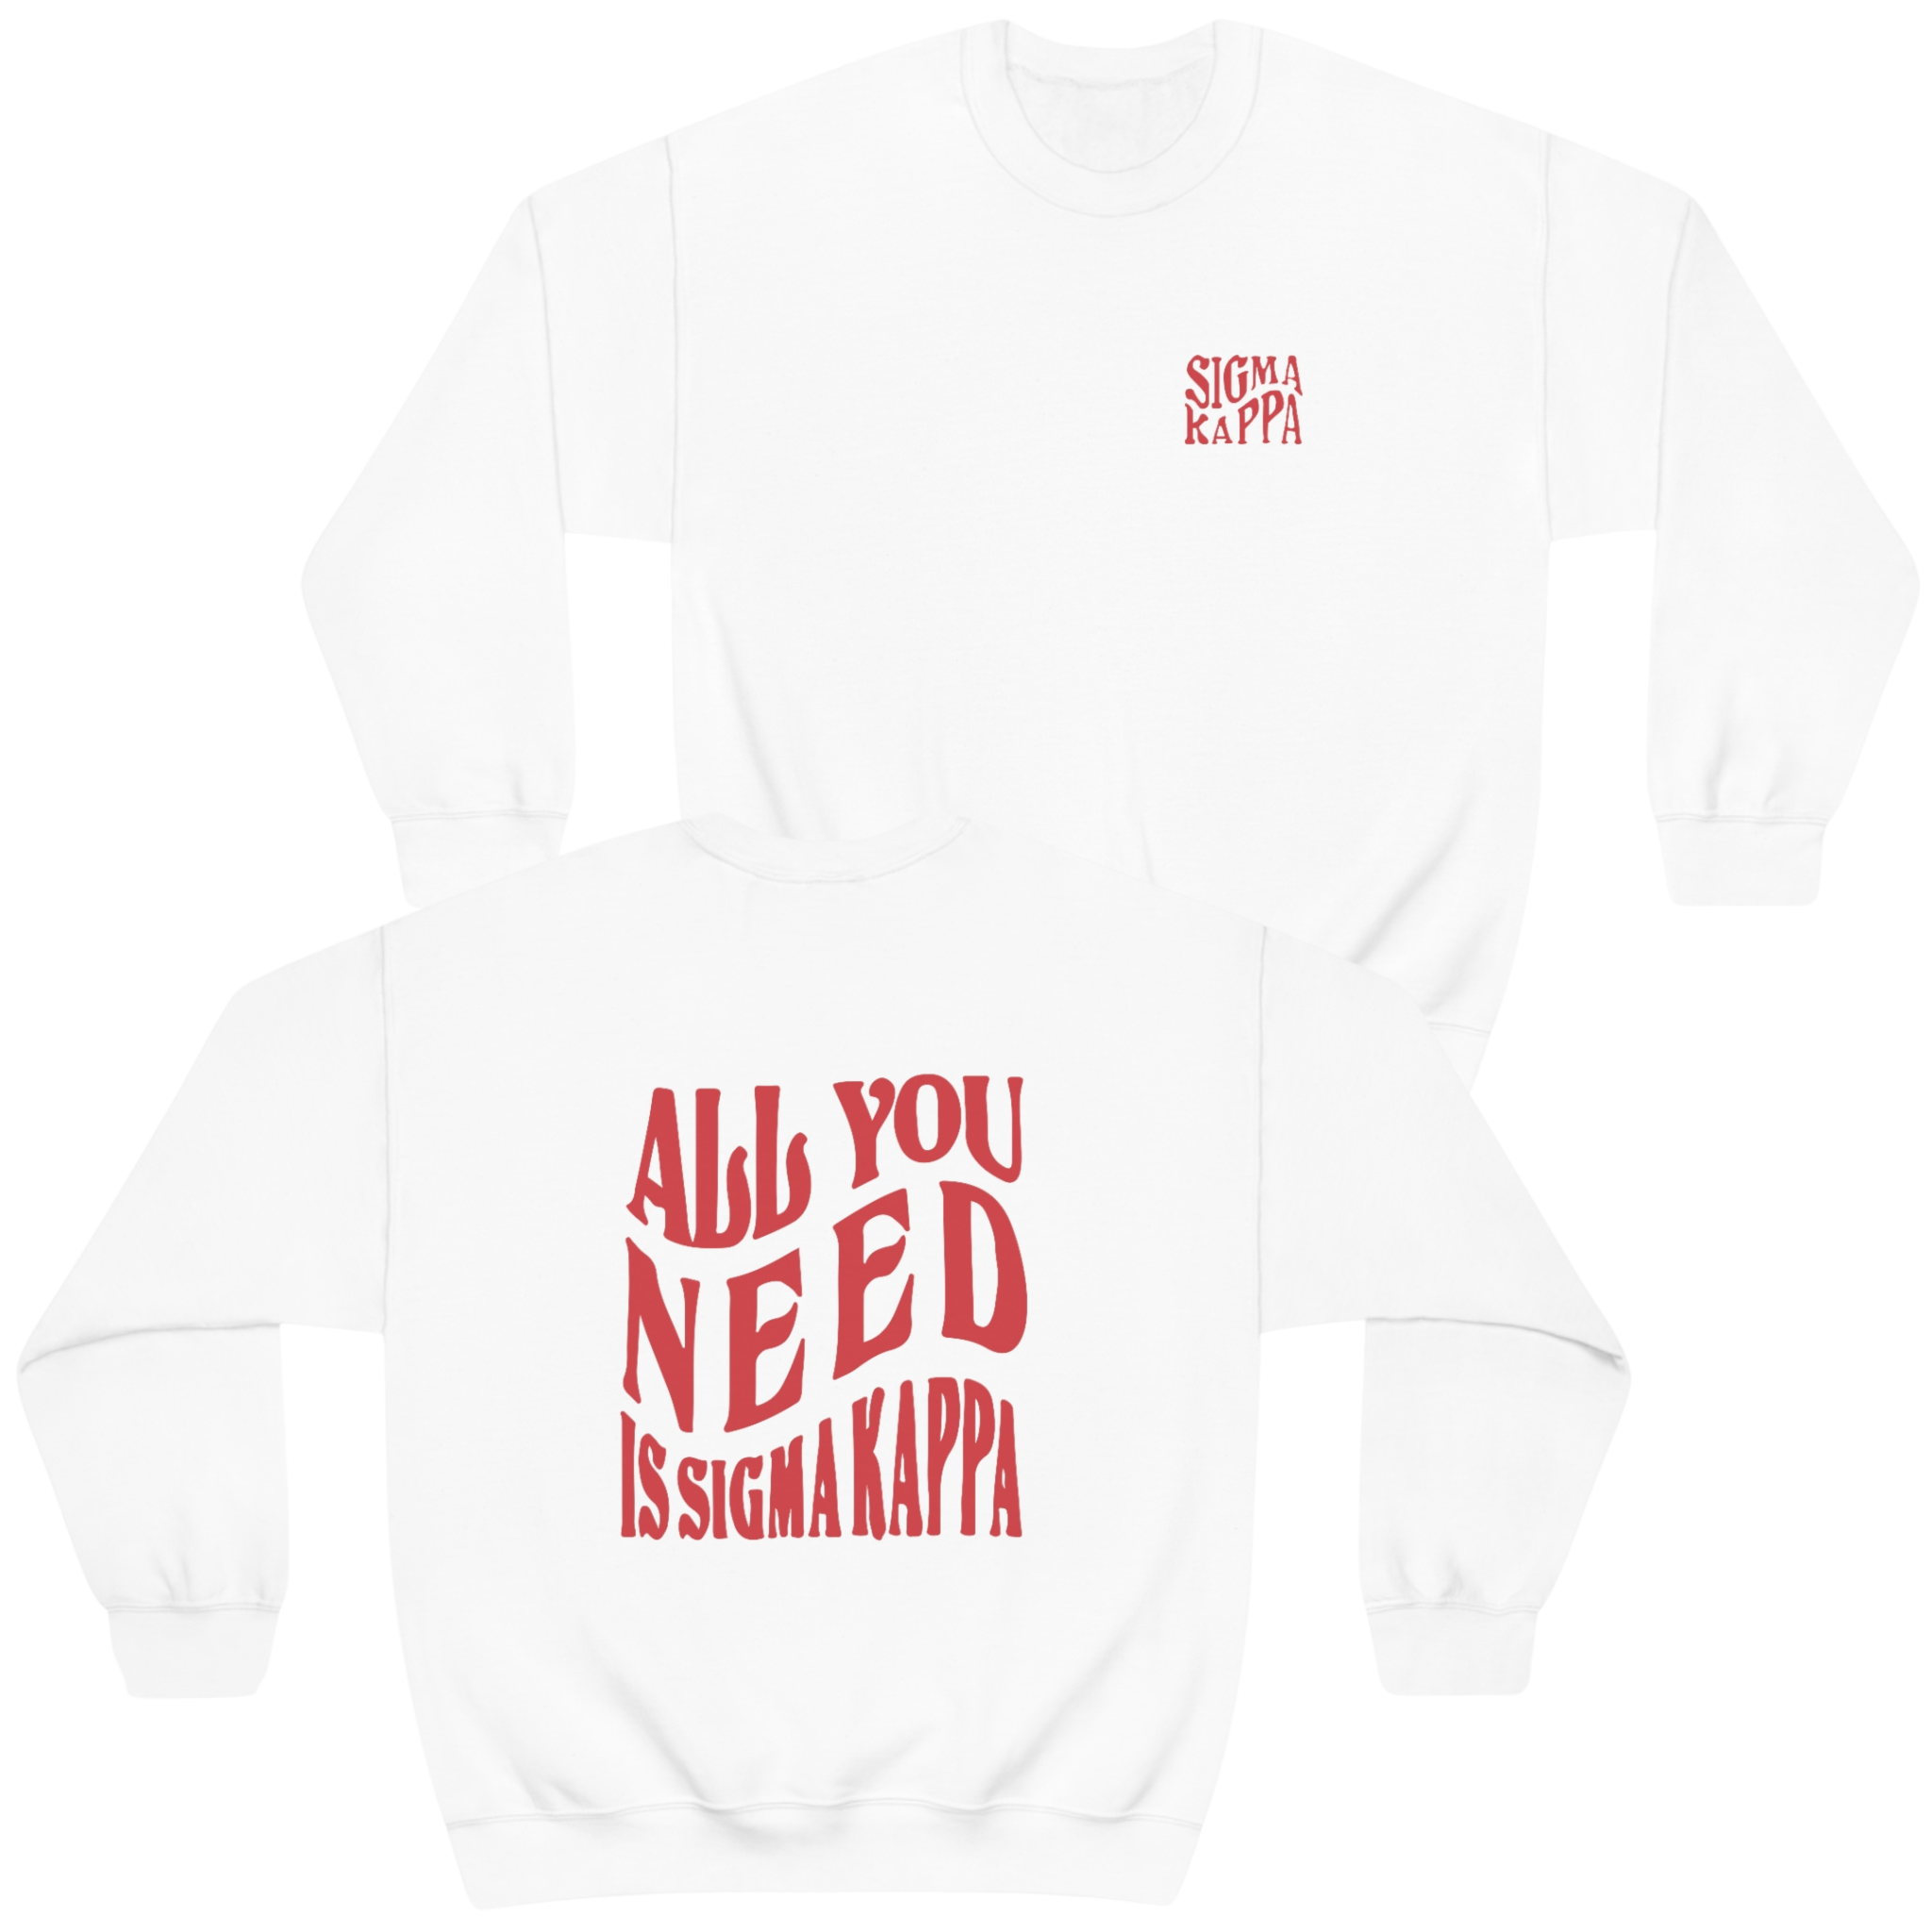 Need Crewneck Kappa Sweatshirt Is Kappa All Sigma Graphic | Sigma You